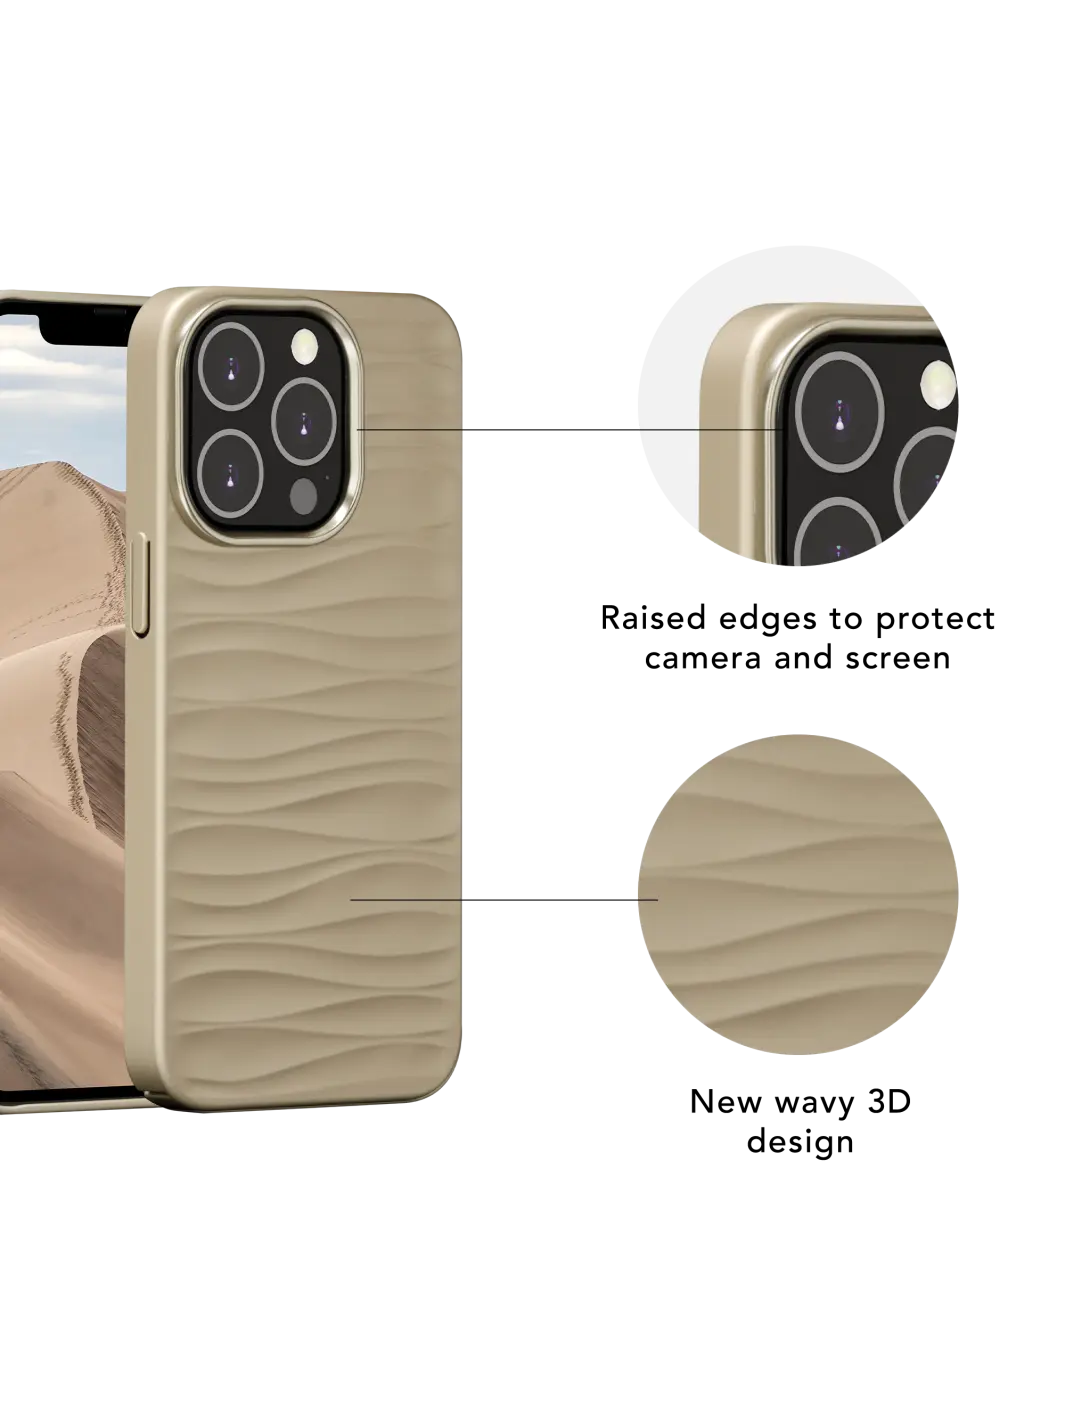 Dune Sand iPhone 12 12 PRO Phone Cases